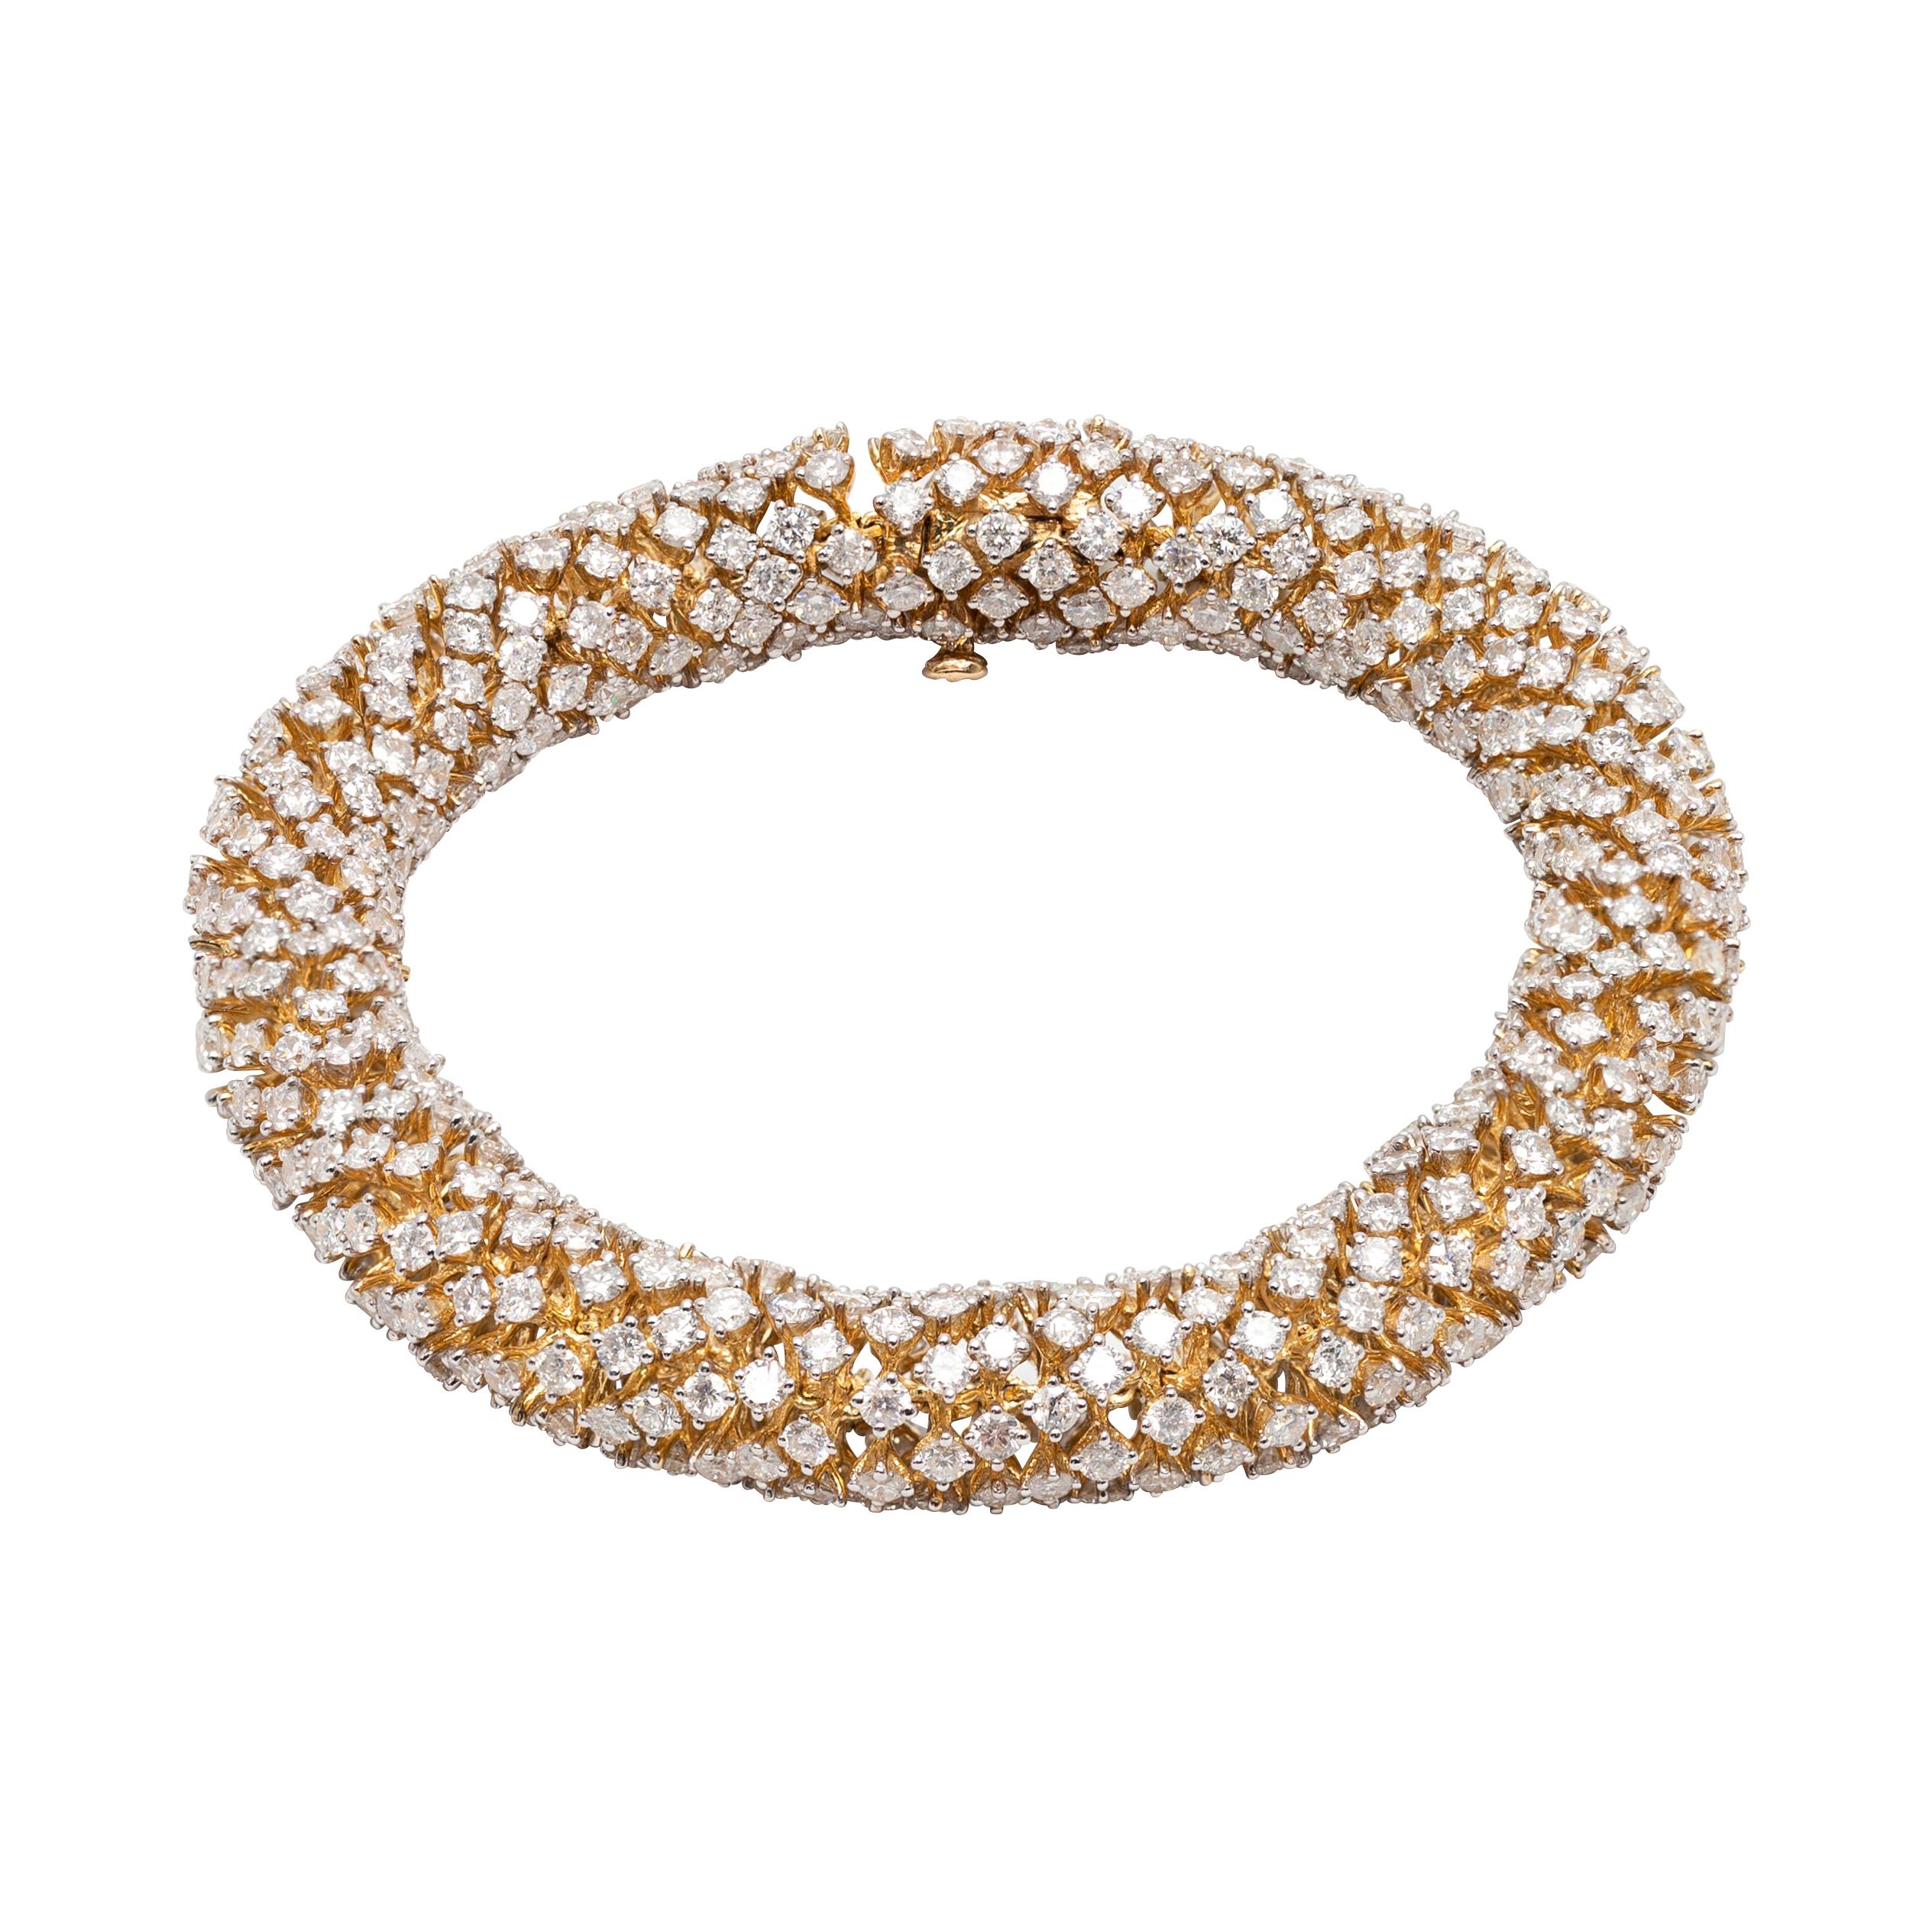 Modern Serpentine 18.41 Carat Diamond Semi-Flexible Bracelet in Yellow Gold